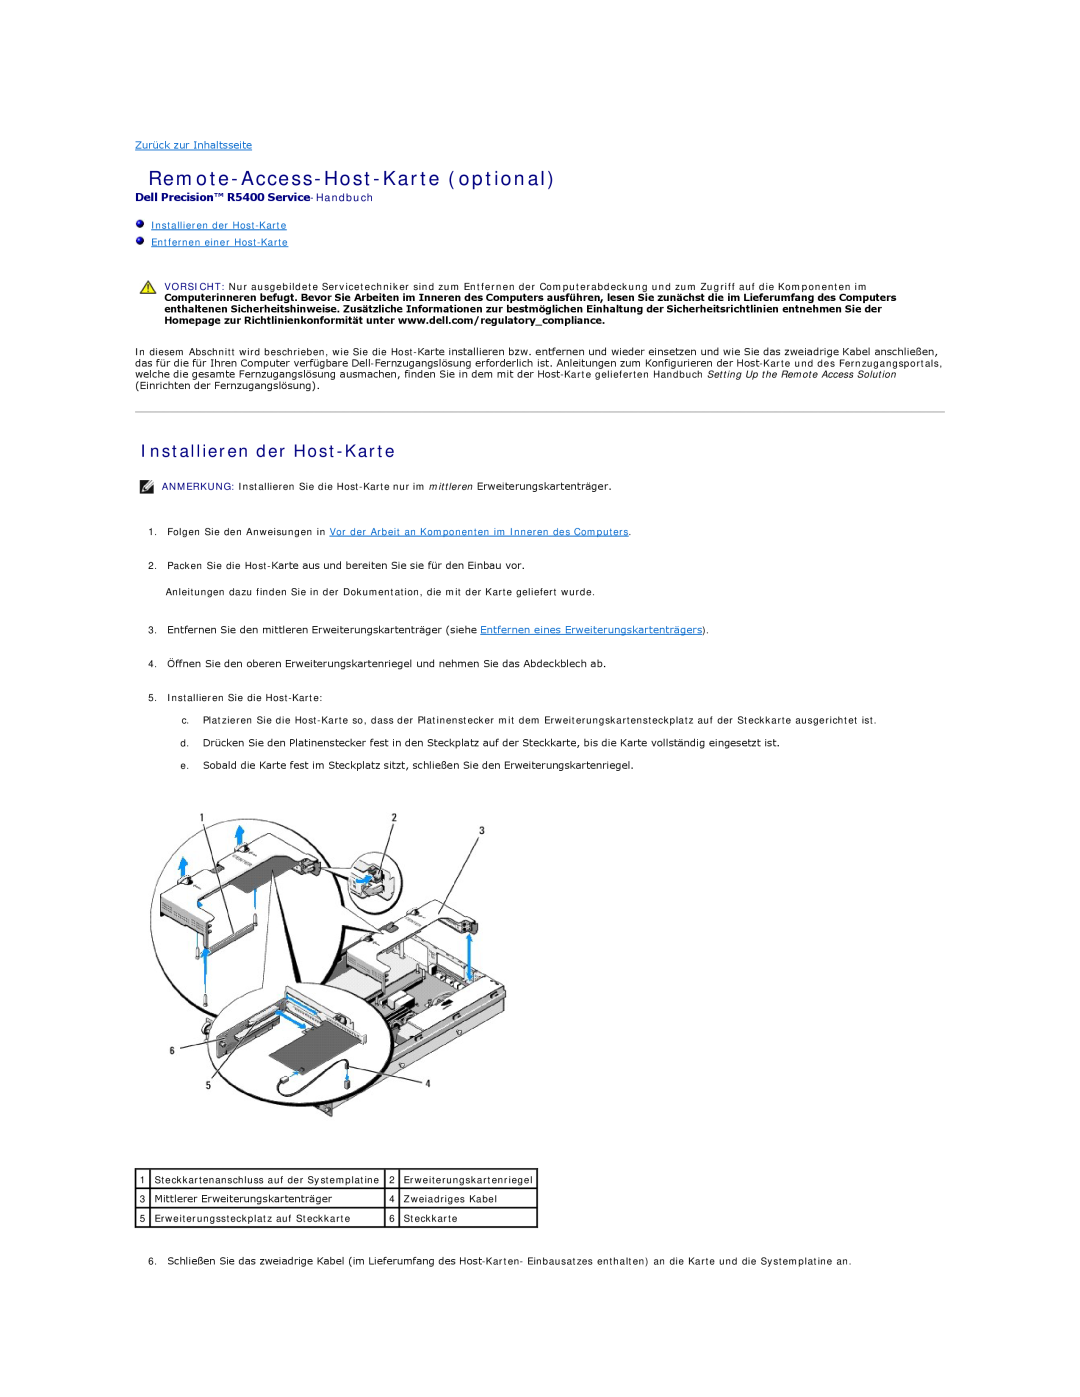 Dell manual Remote-Access-Host-Karte optional, Installieren der Host-Karte, Dell Precision R5400 Service-Handbuch 